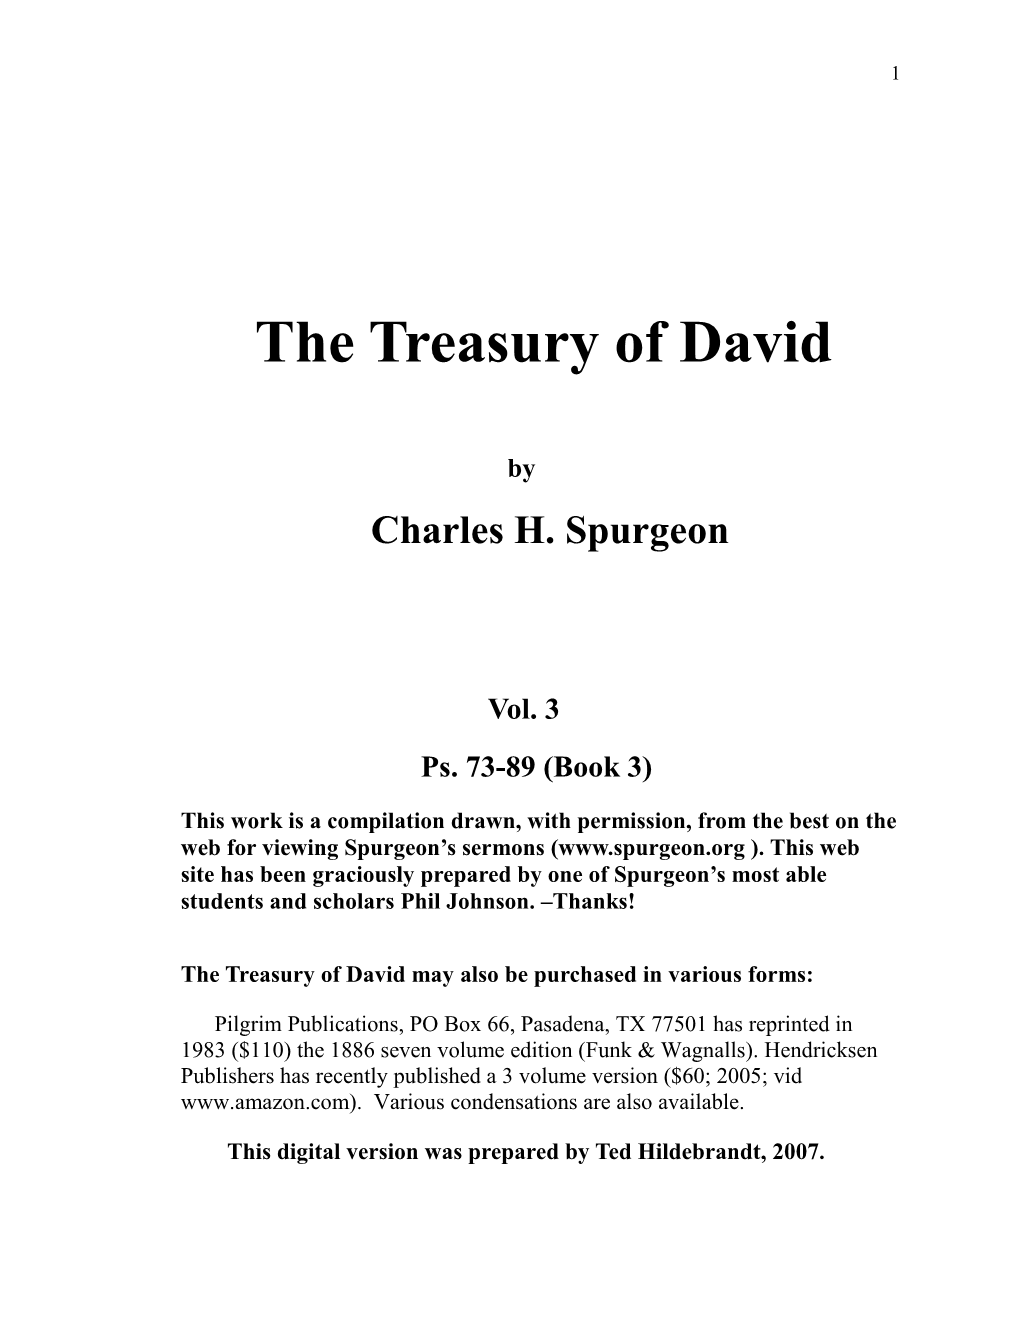 Treasury of David (Vol. 3 Chs. 73-89)